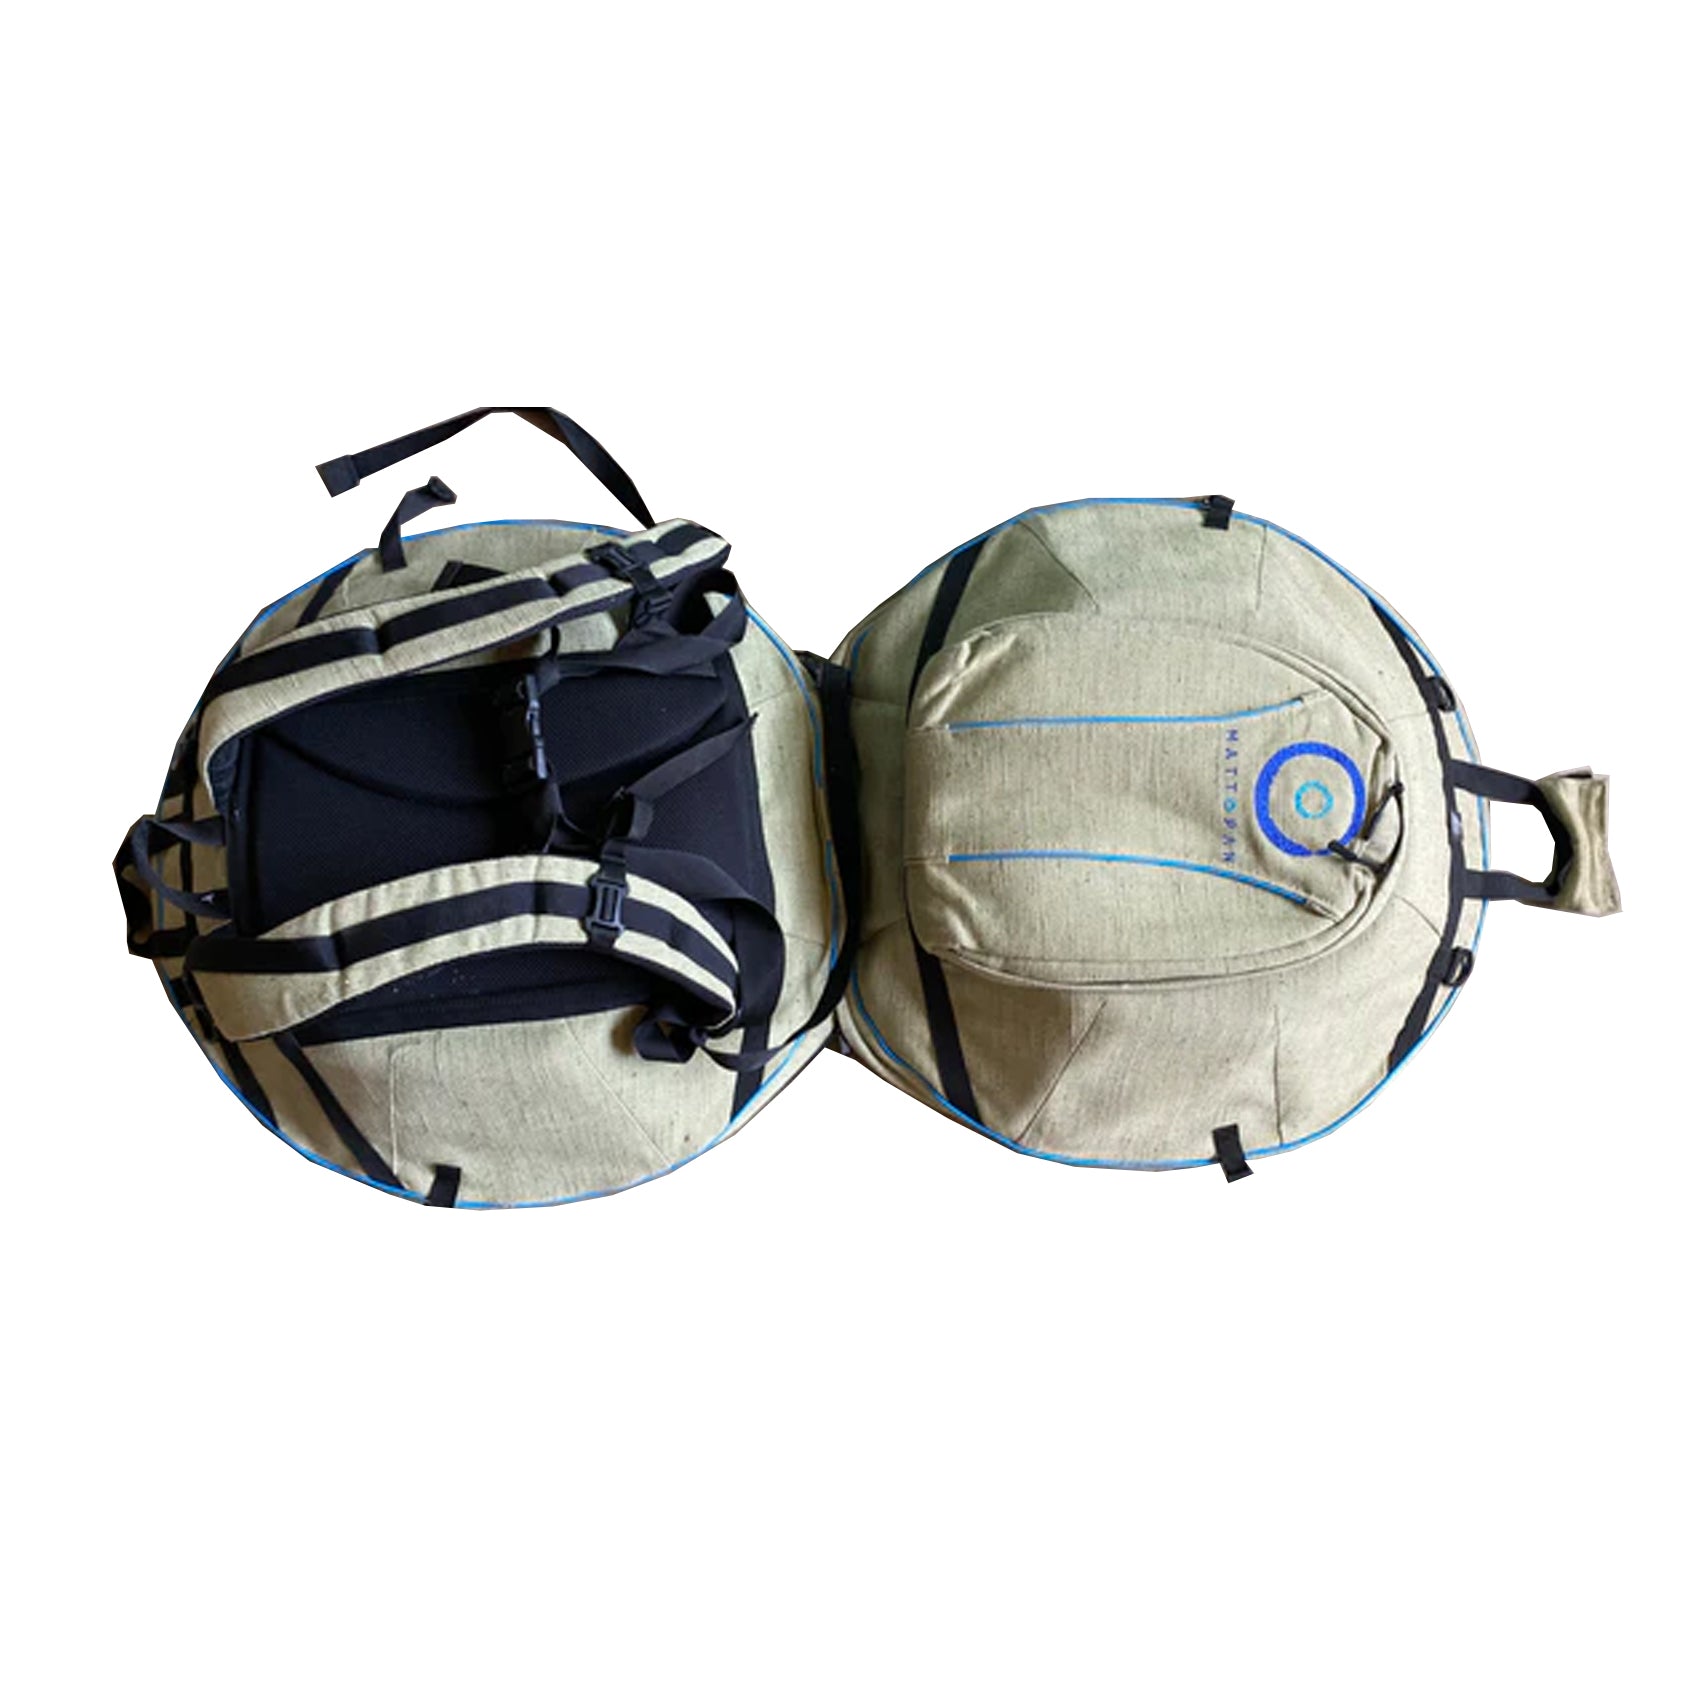 MattOpan - Backpack Handpan by Matt Ostila, Northern Rivers, Australia